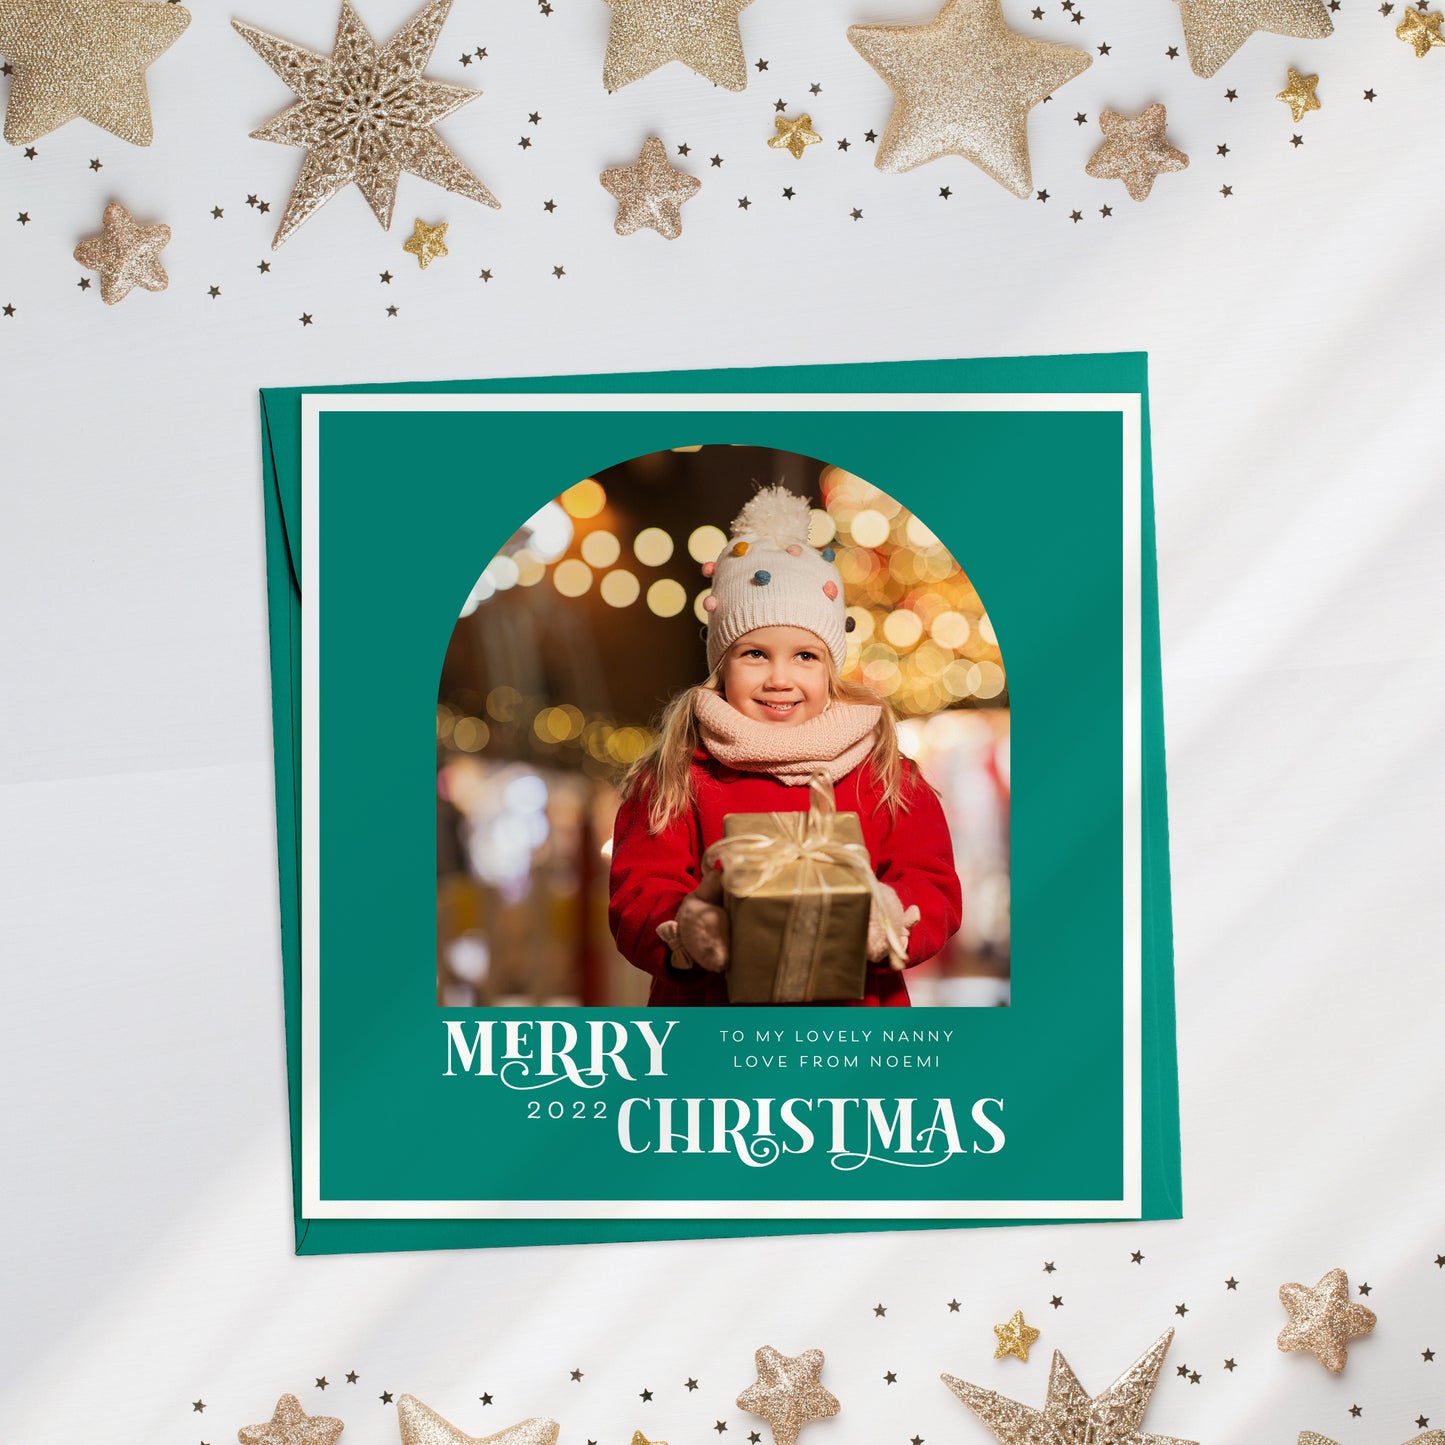 Personalised Photo Christmas Card for Grandma and Grandad